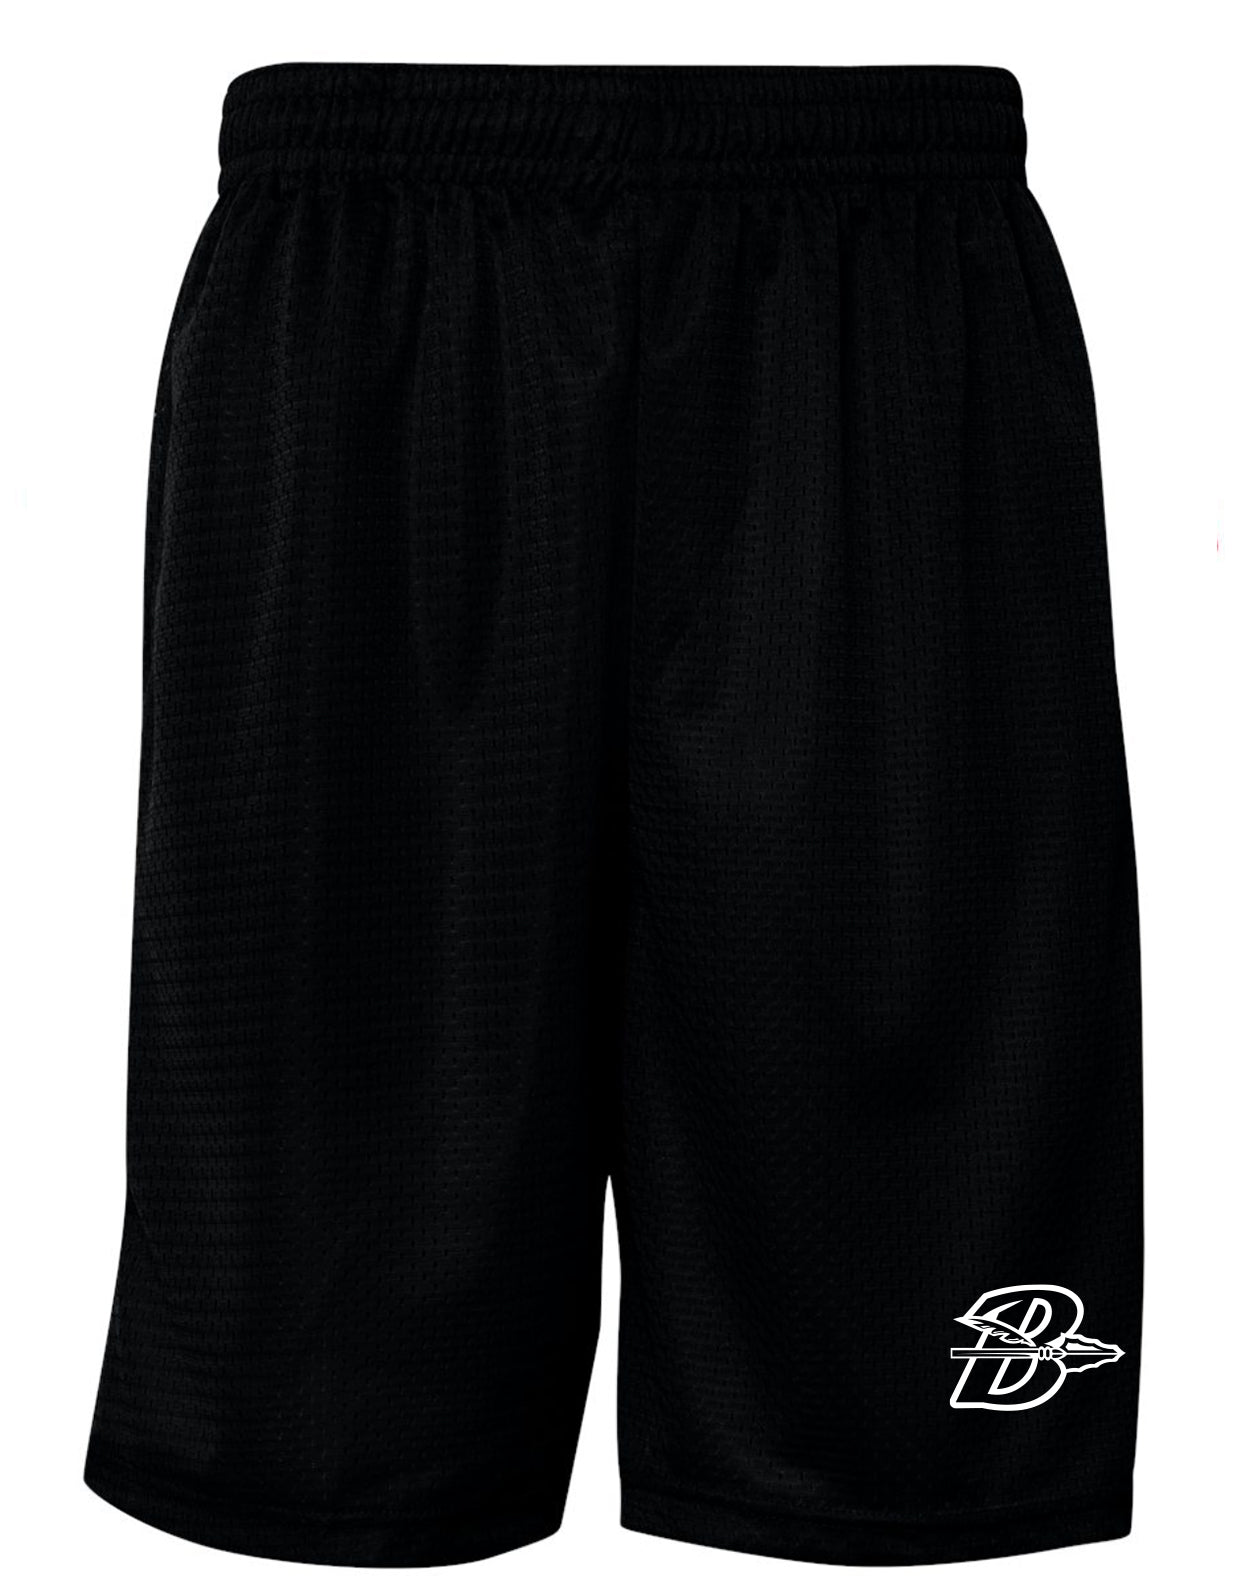 Bellmore Braves Shorts